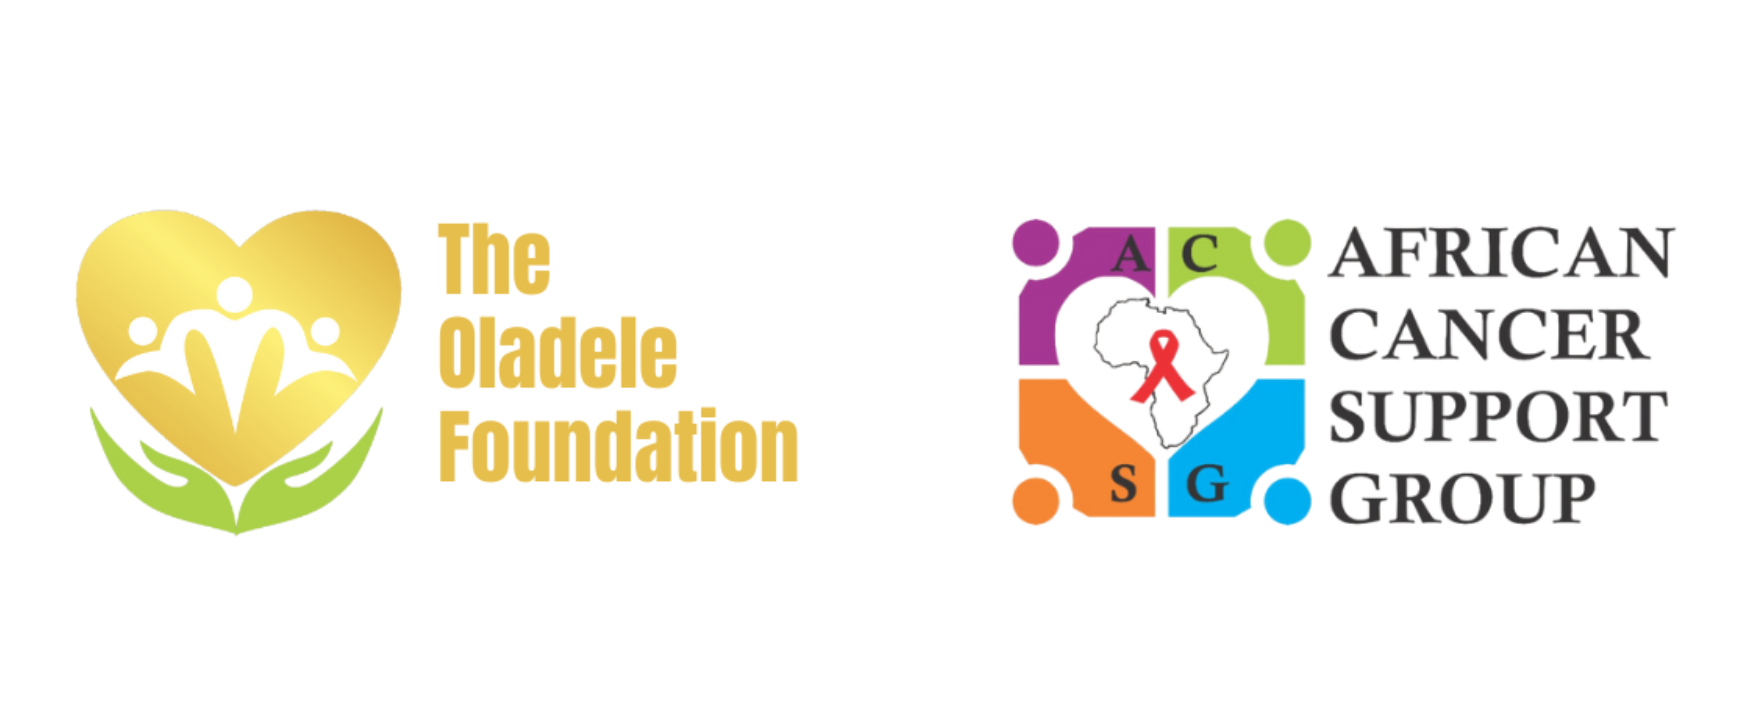 Oladele Foundation and ASG